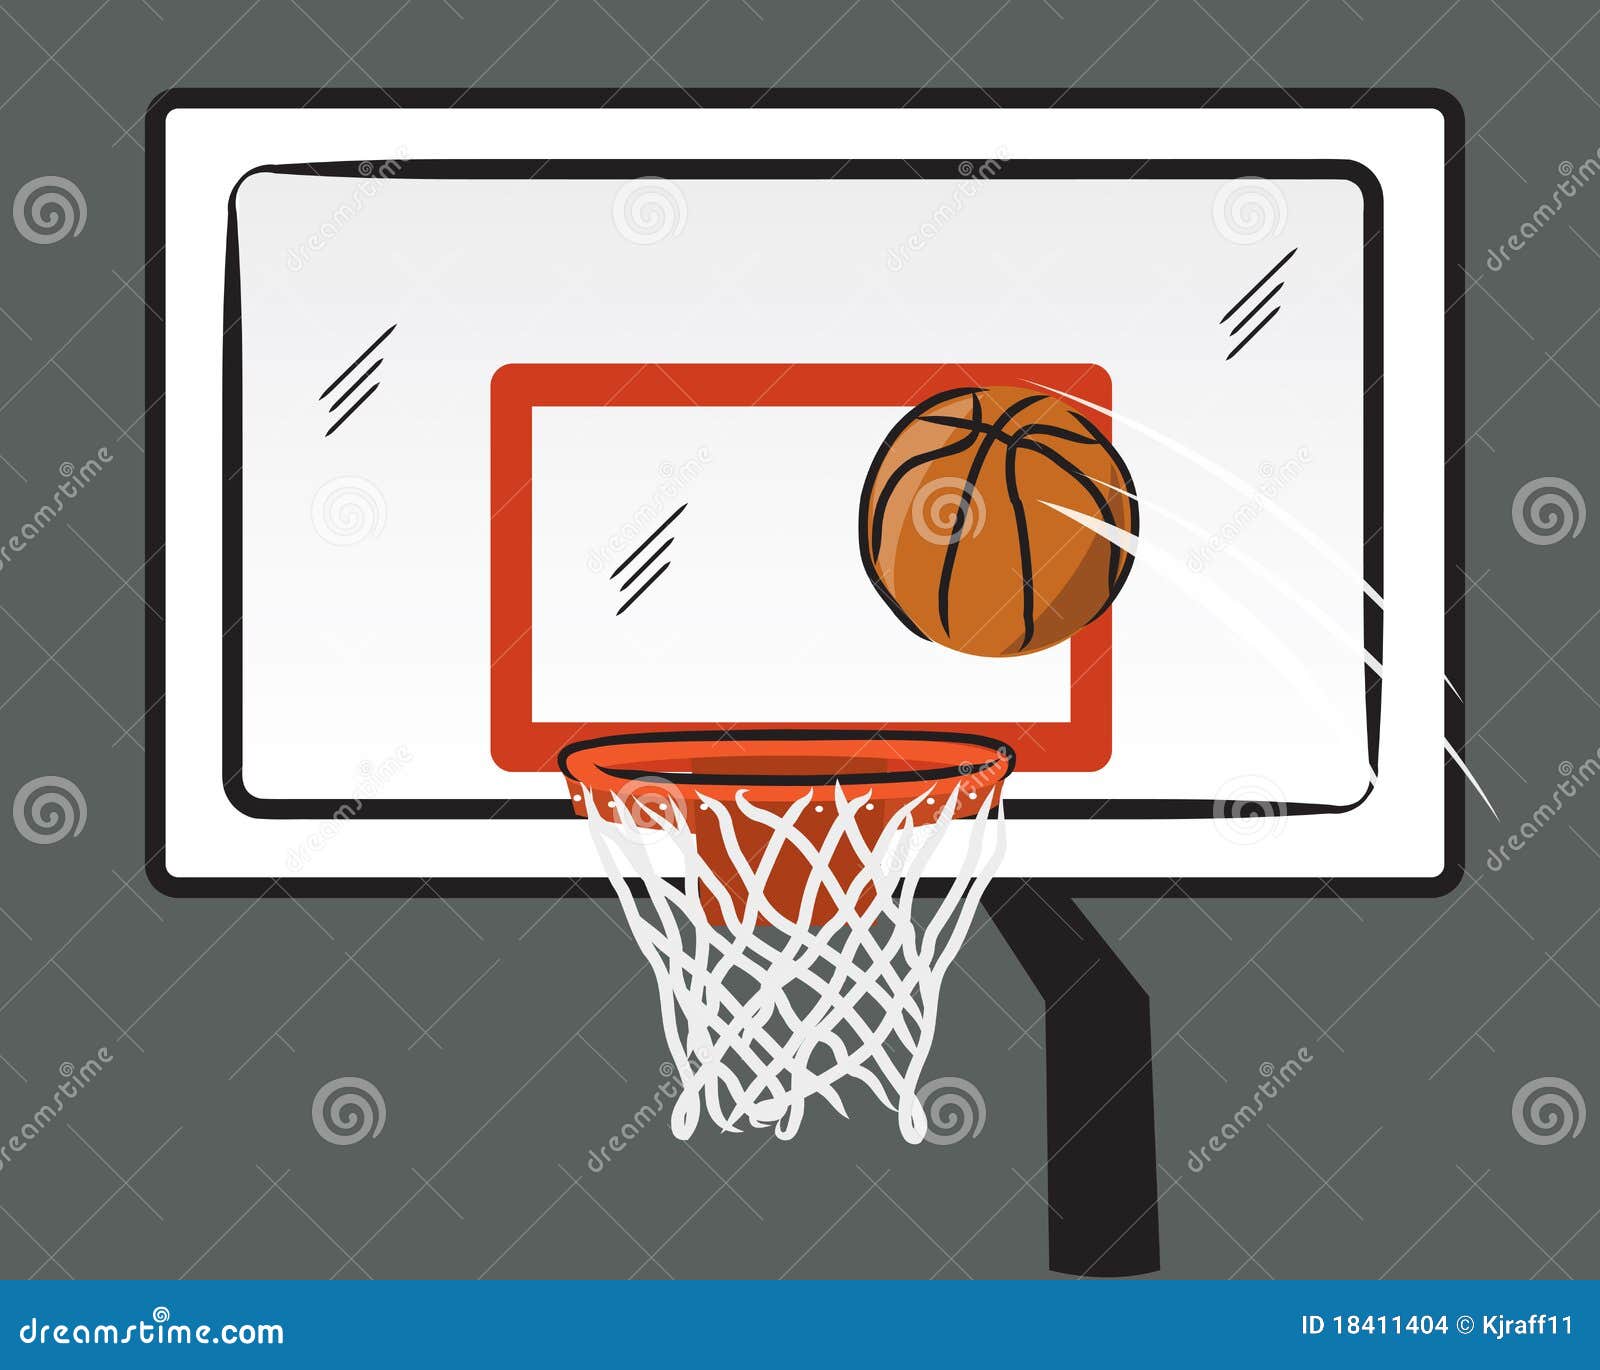 Basketball Hoop Stock Images - Image: 18411404